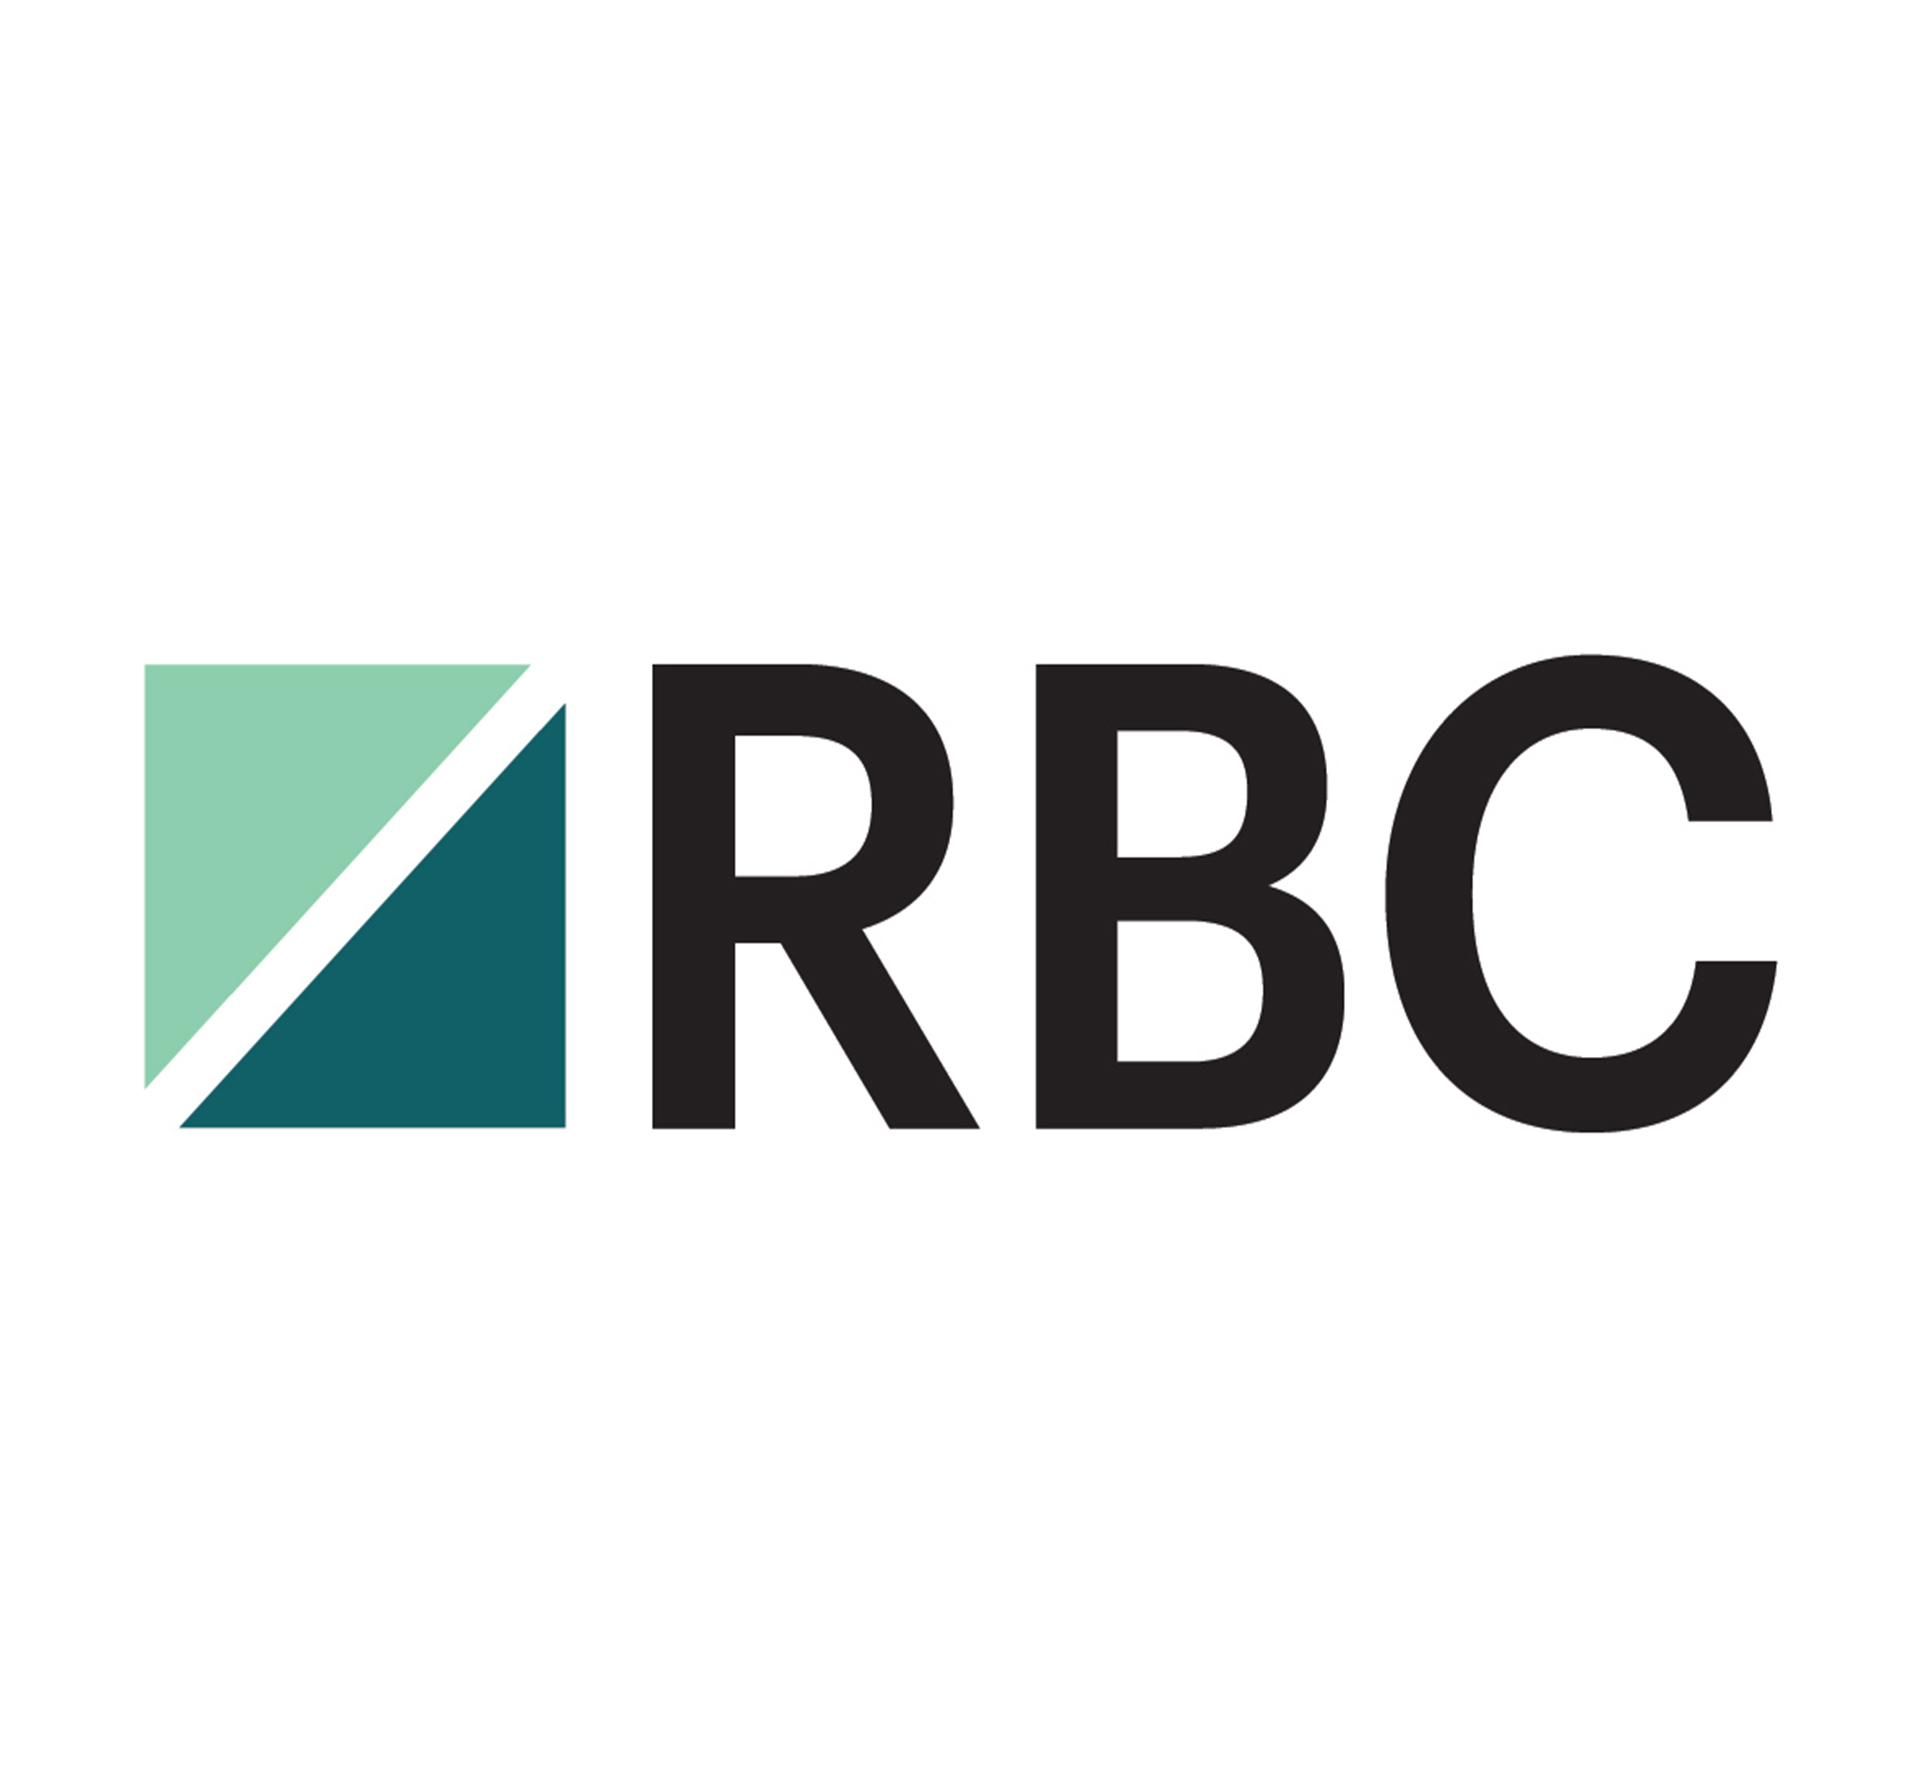 Кэш рбк ру. РБК логотип. Телеканал РБК логотип. РБК логотип на прозрачном фоне. РБК лого без фона.